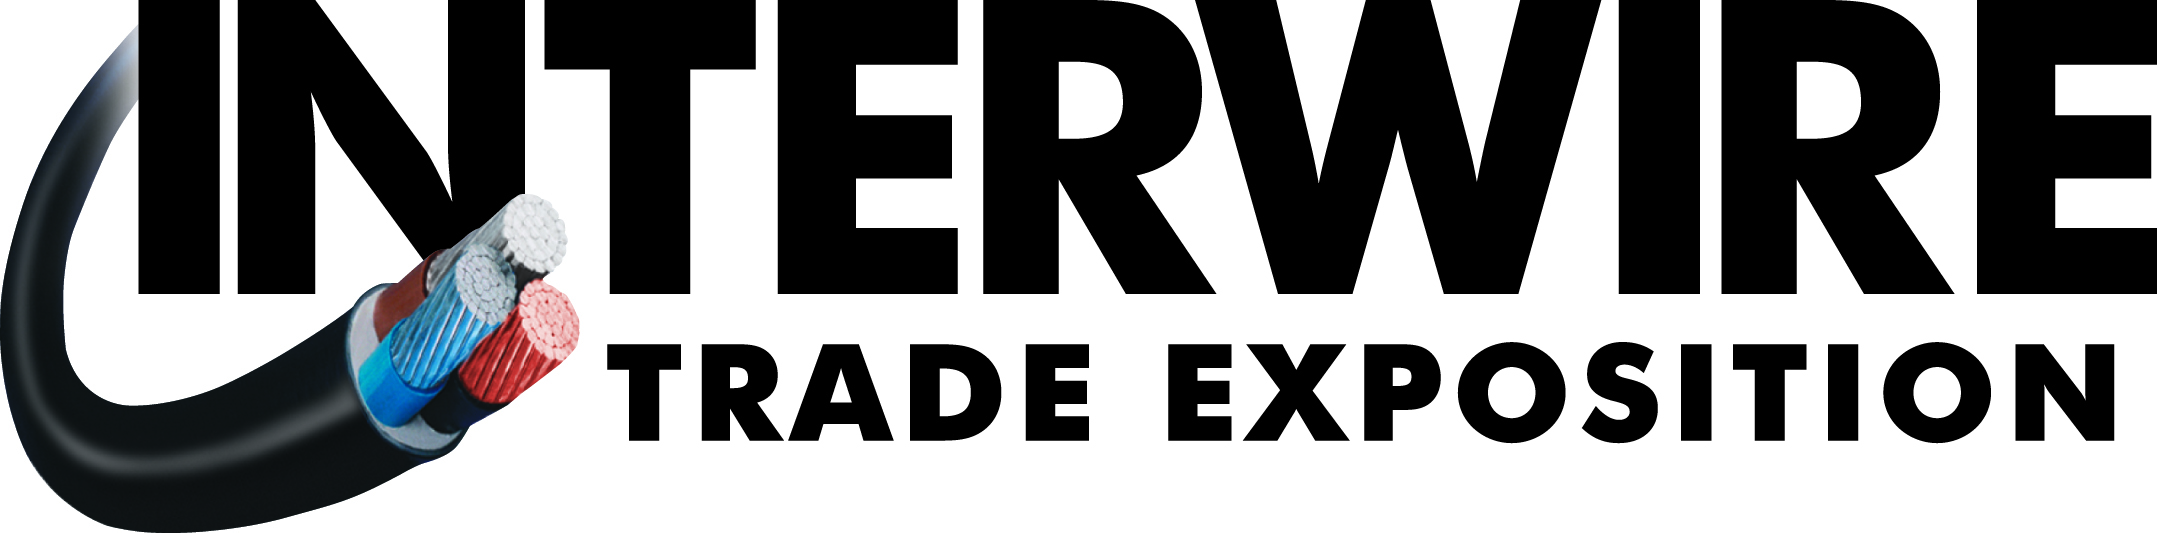 Interwire logo